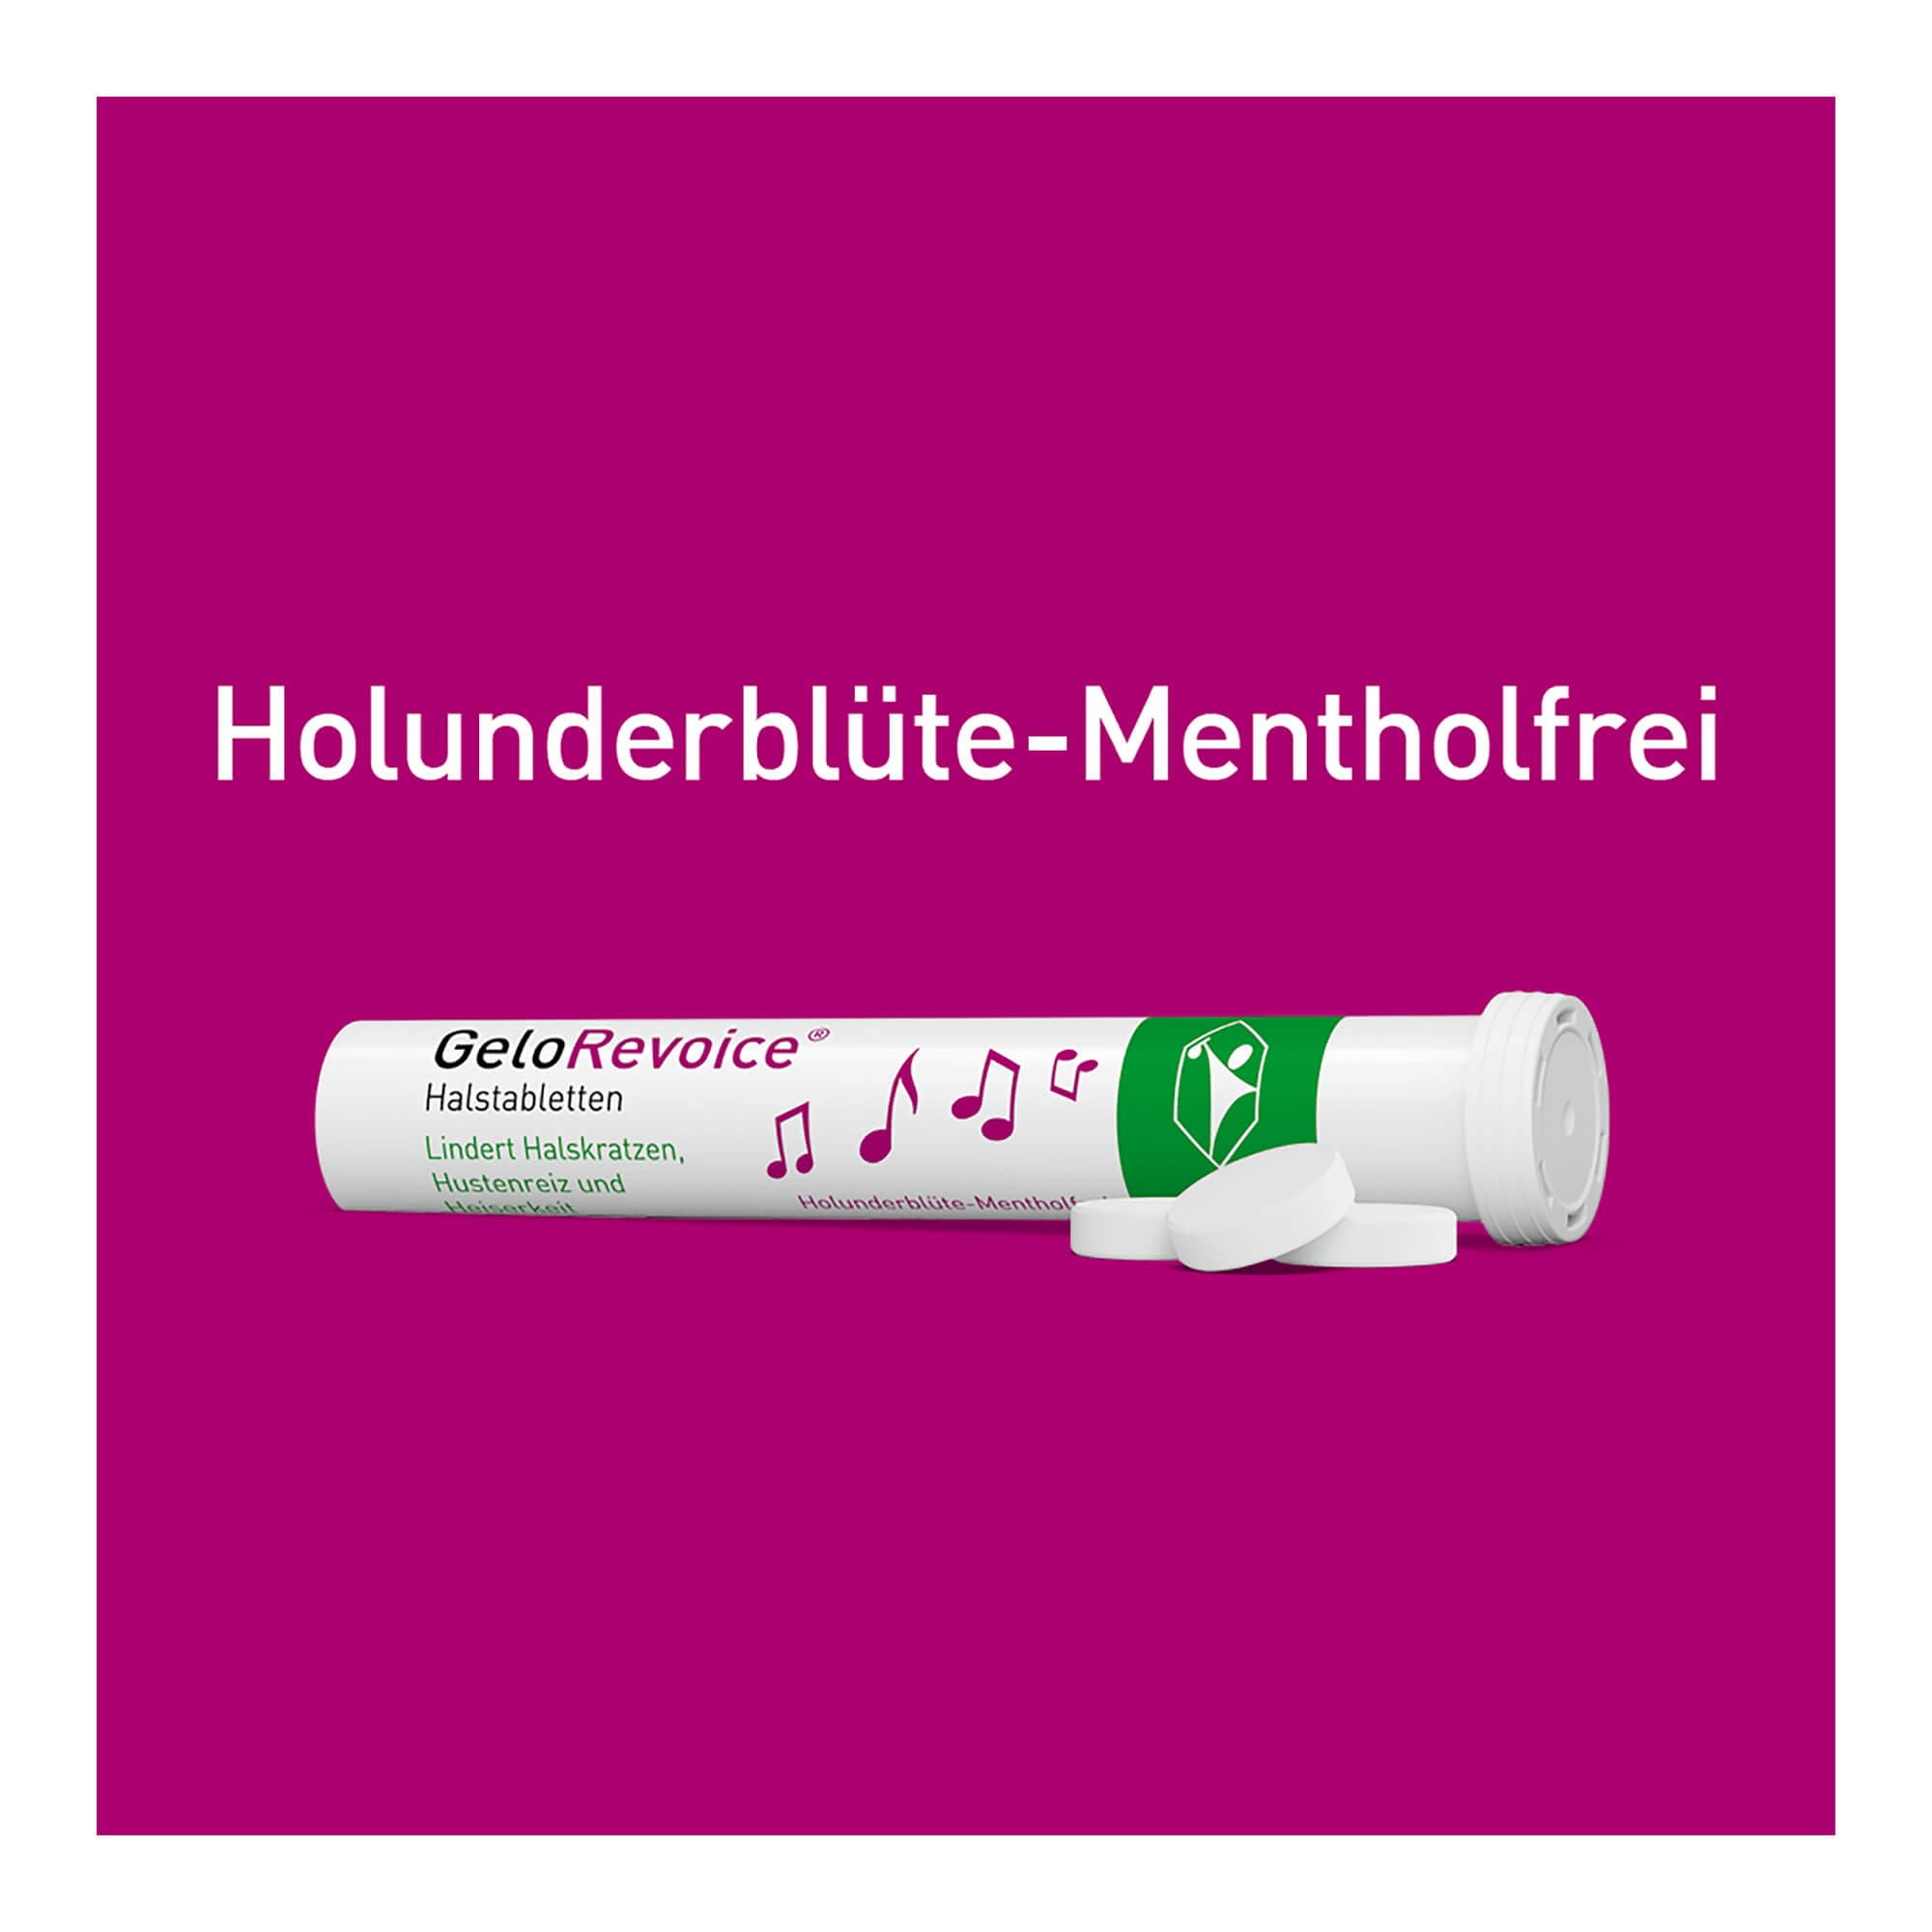 GeloRevoice Halstabletten Holunderblüte-Mentholfrei